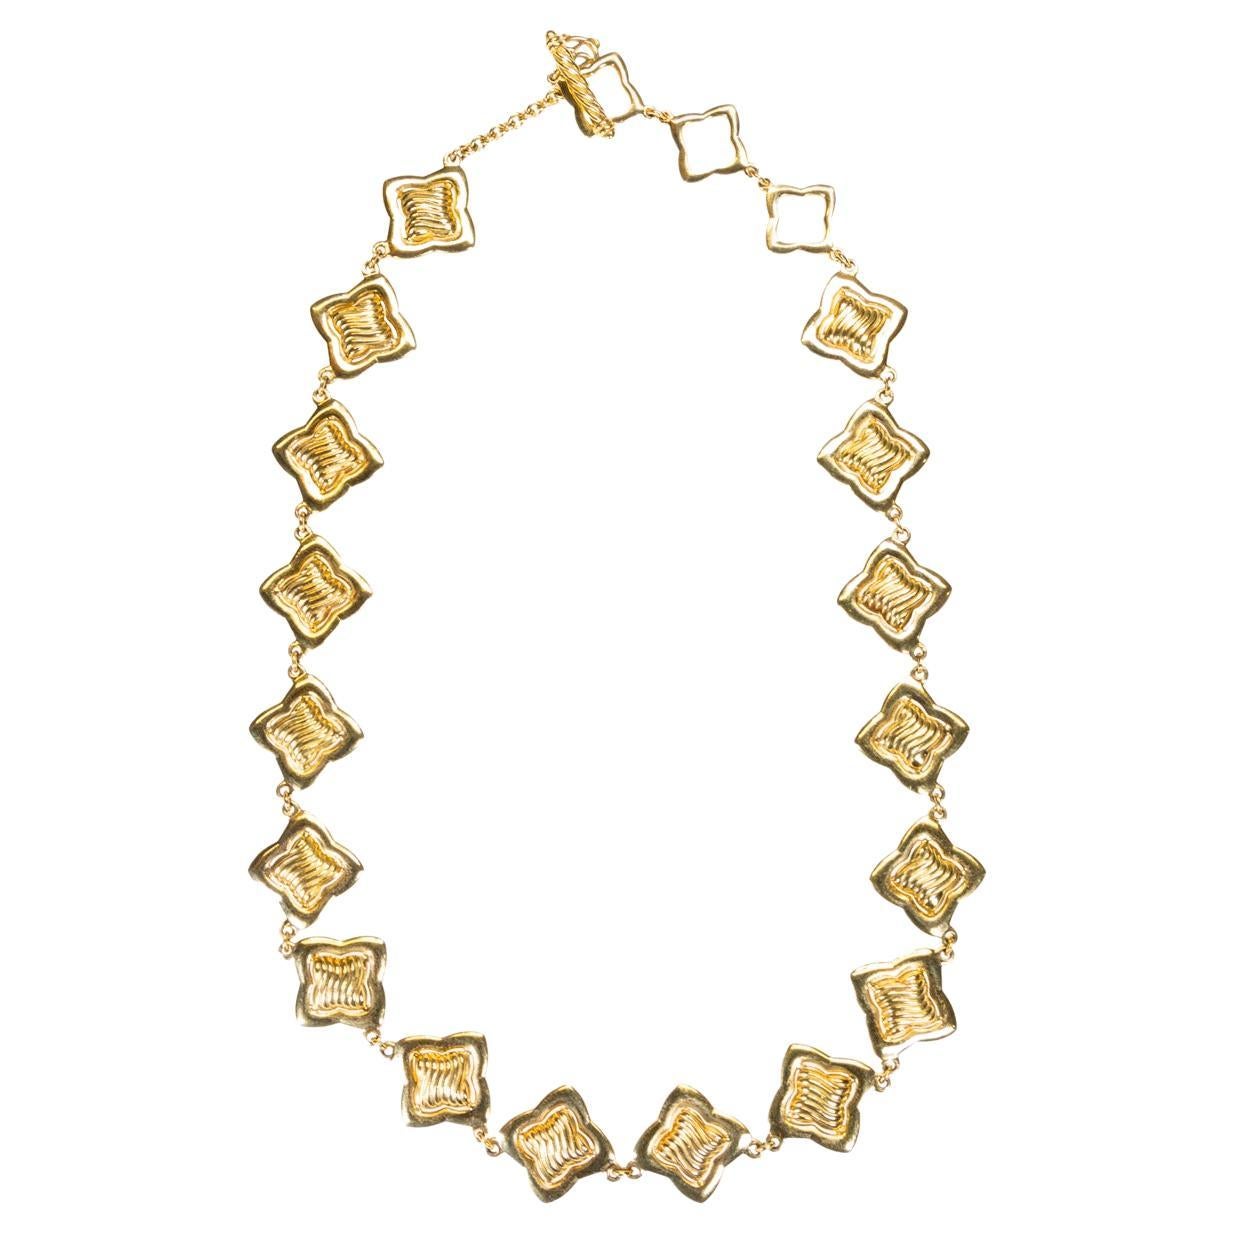 Rare David Yurman Quatrefoil 18K Solid Yellow Gold Necklace Limited Series Piece